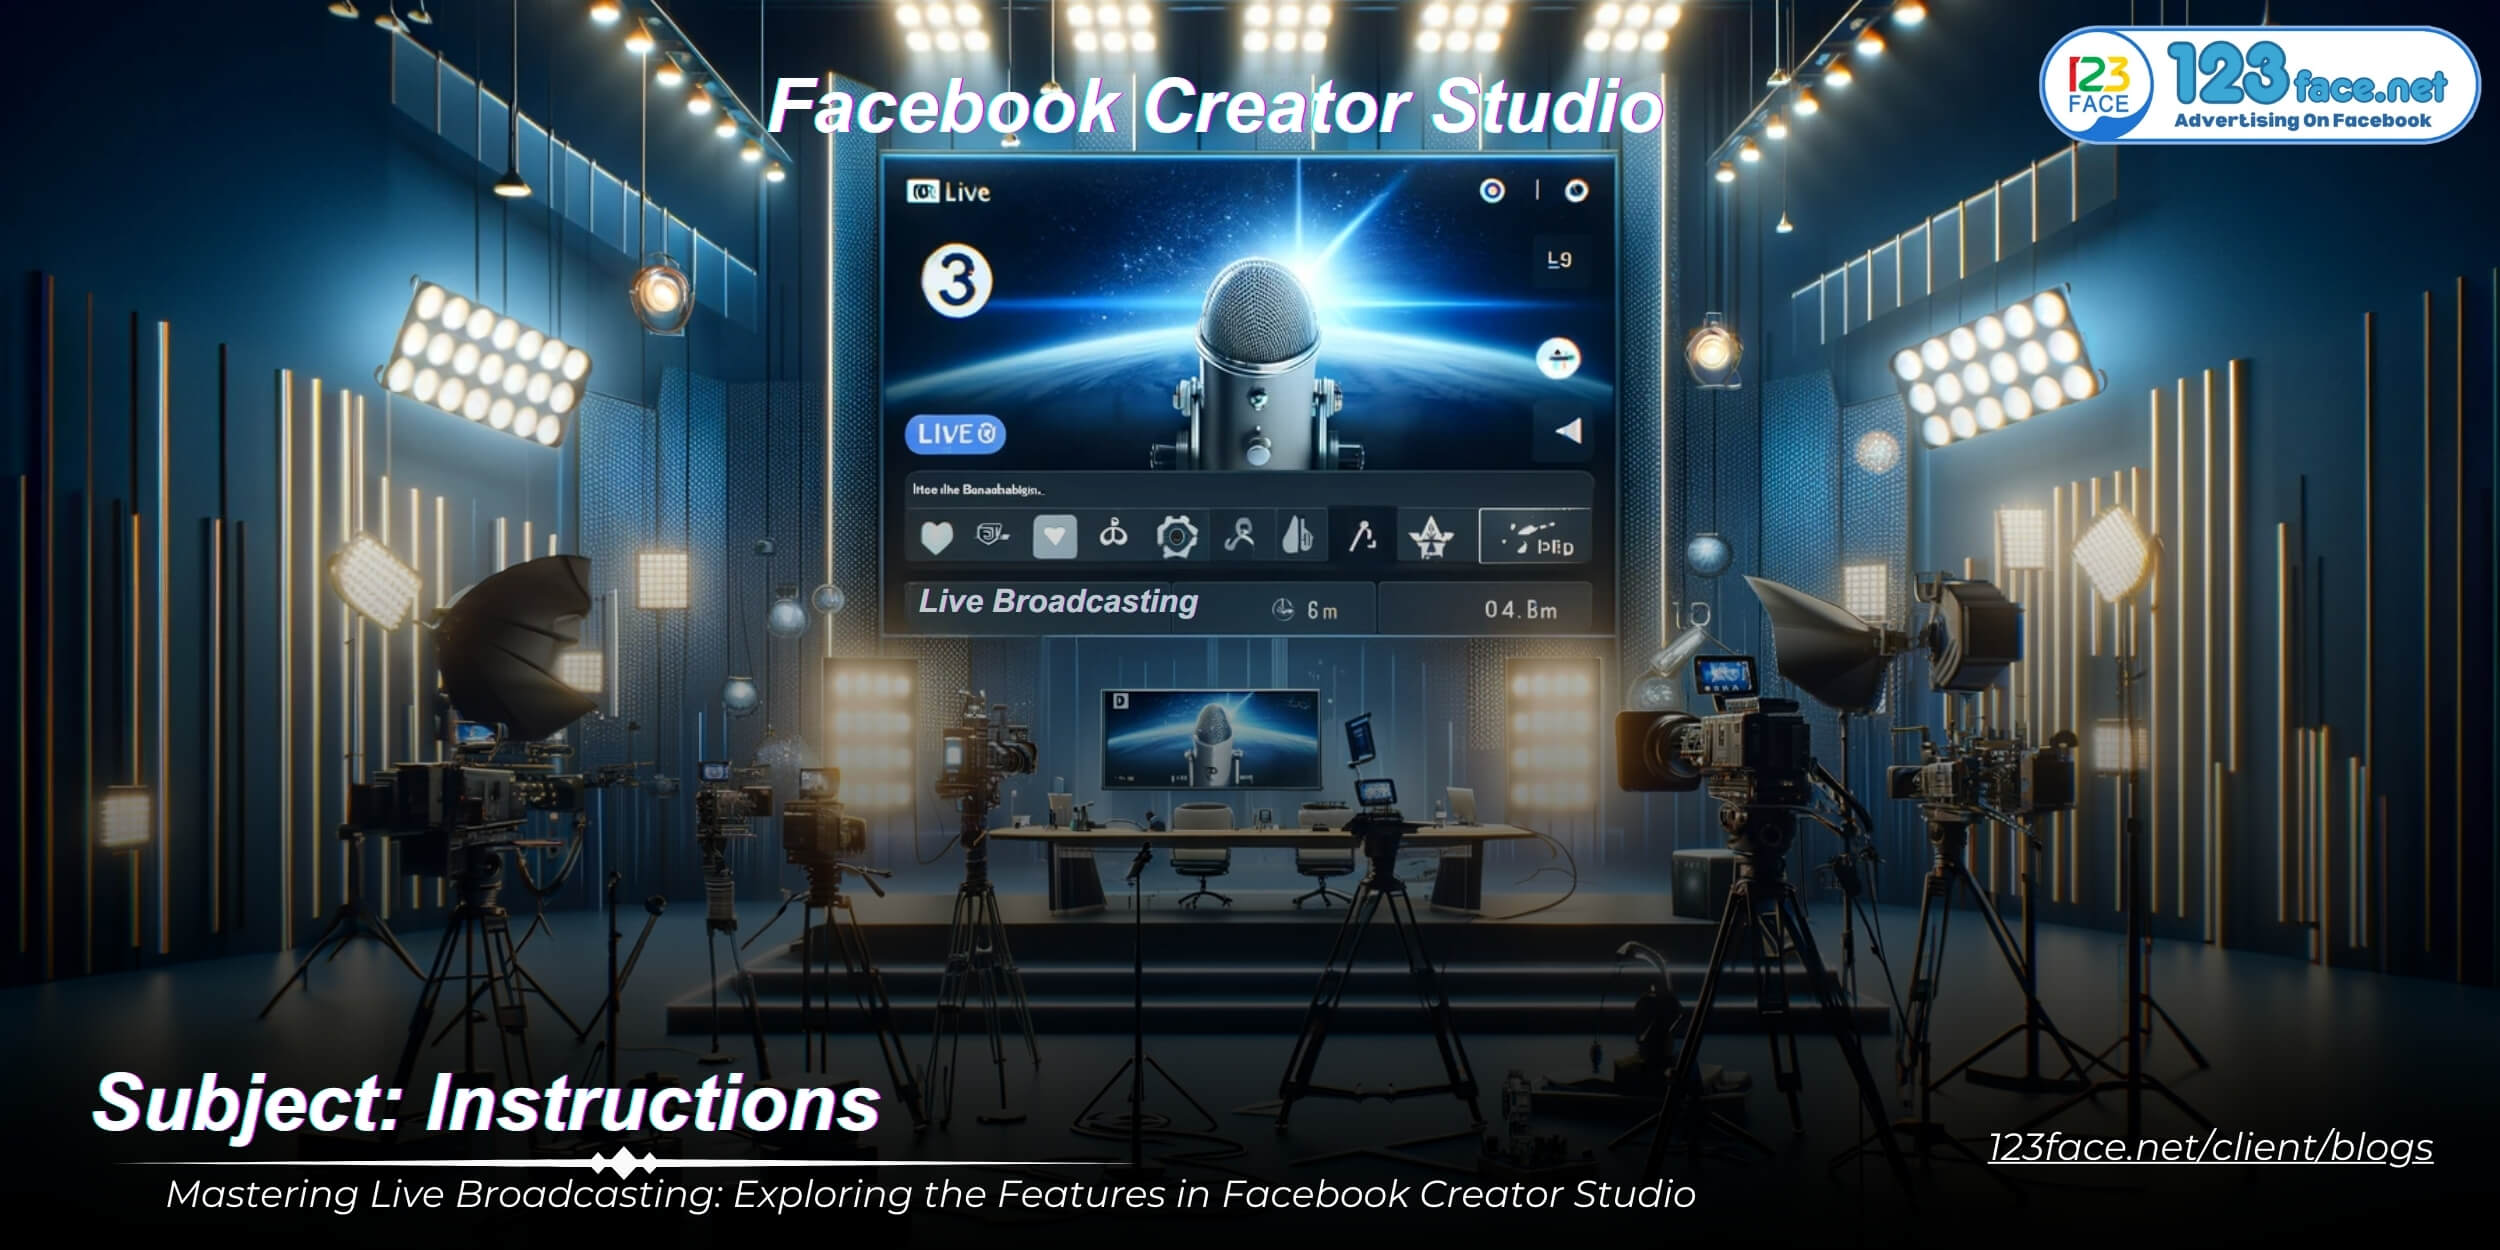 Mastering Live Broadcasting: Exploring the Features in Facebook Creator Studio